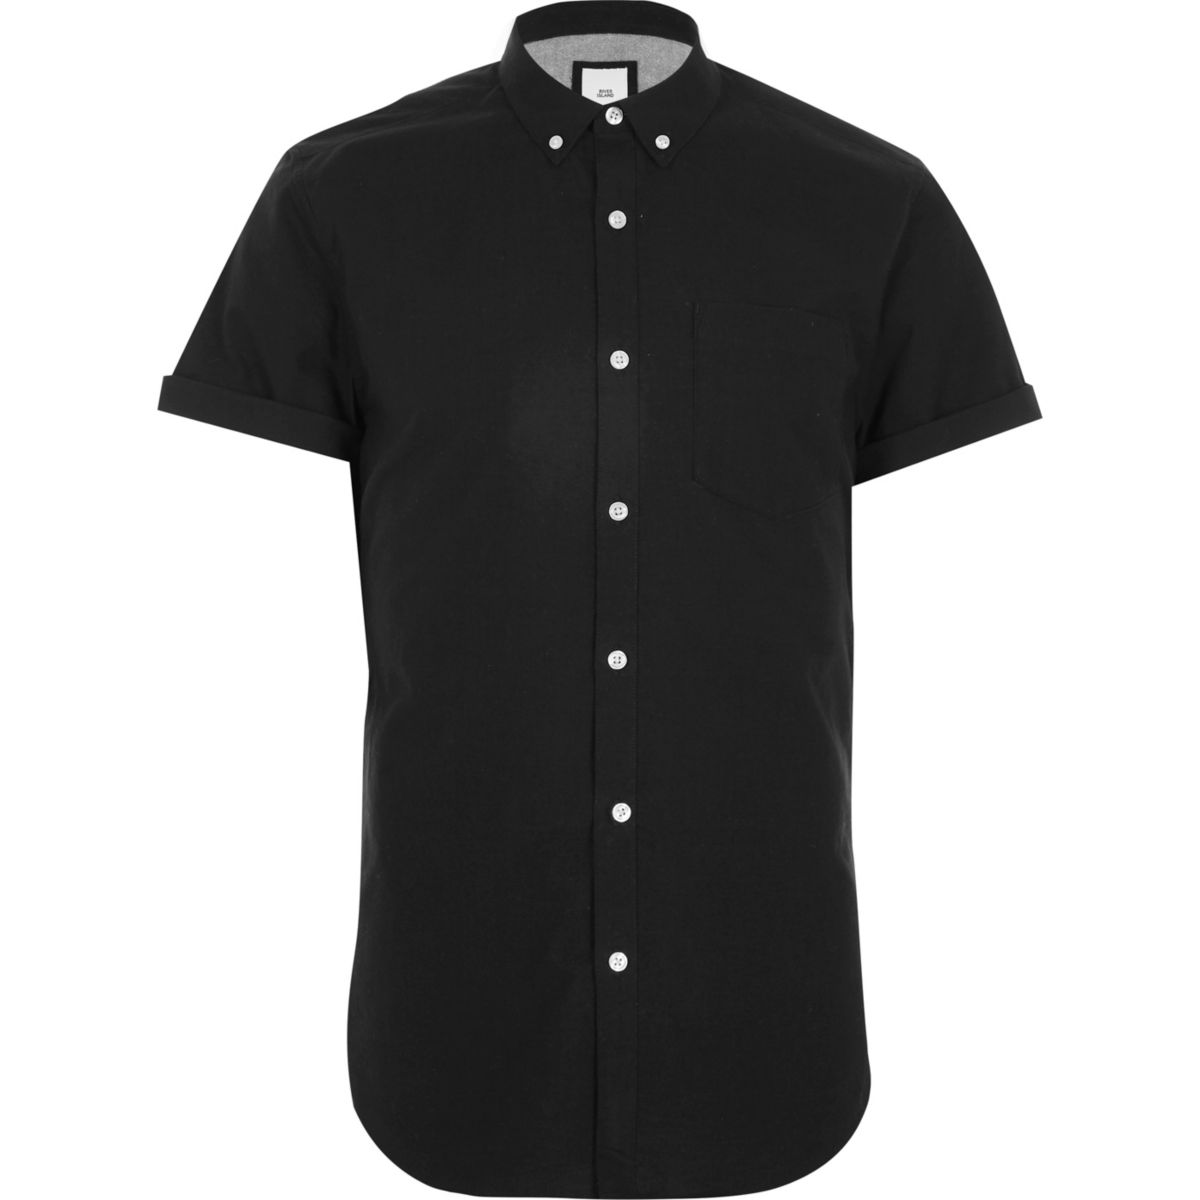 Black short sleeve slim fit Oxford shirt - Shirts - Sale - men